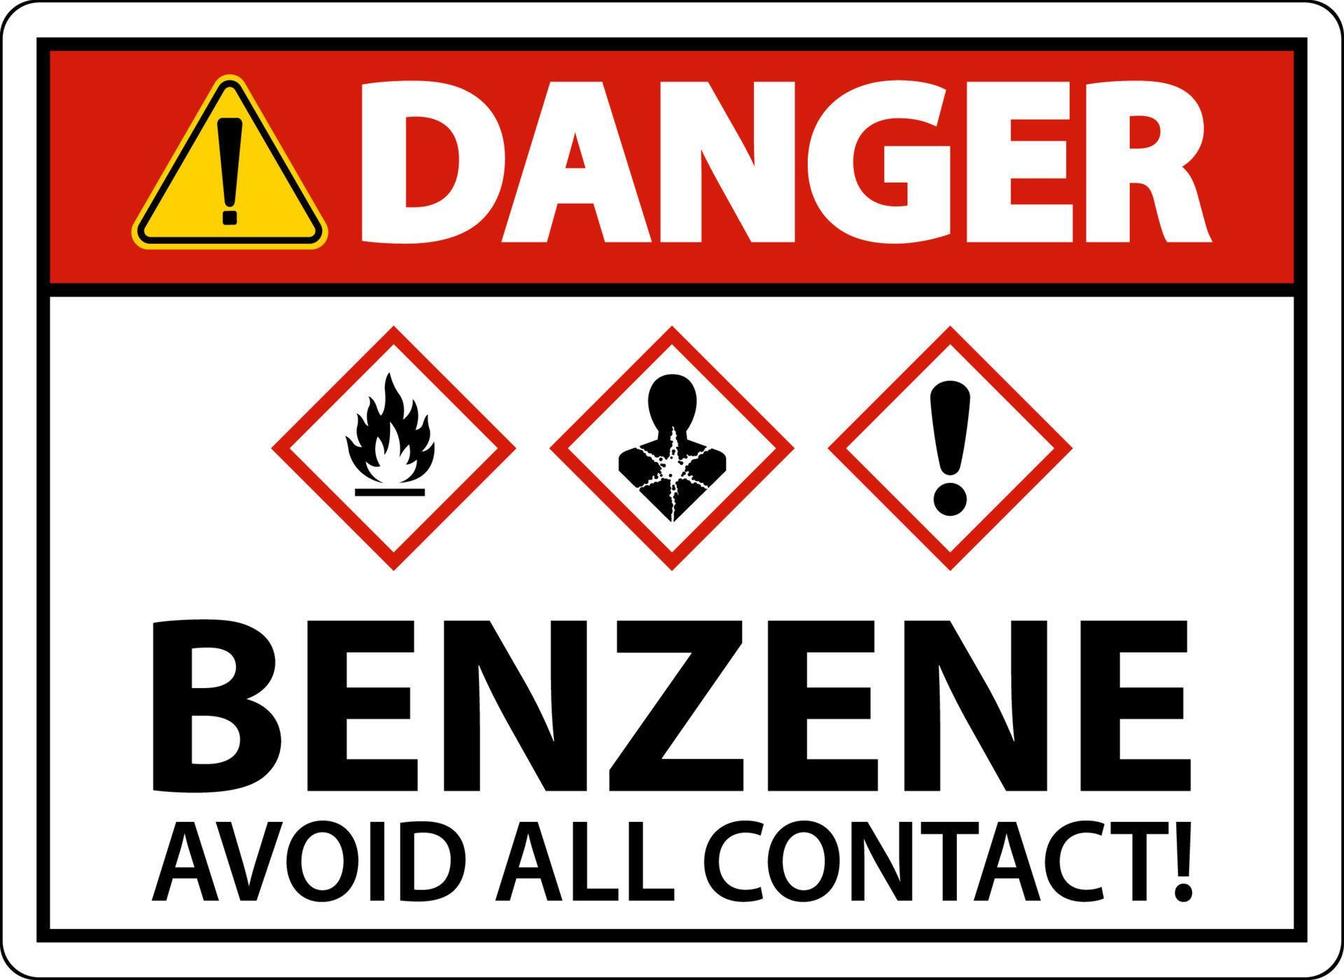 Danger Benzene Avoid All Contact GHS Sign On White Background vector